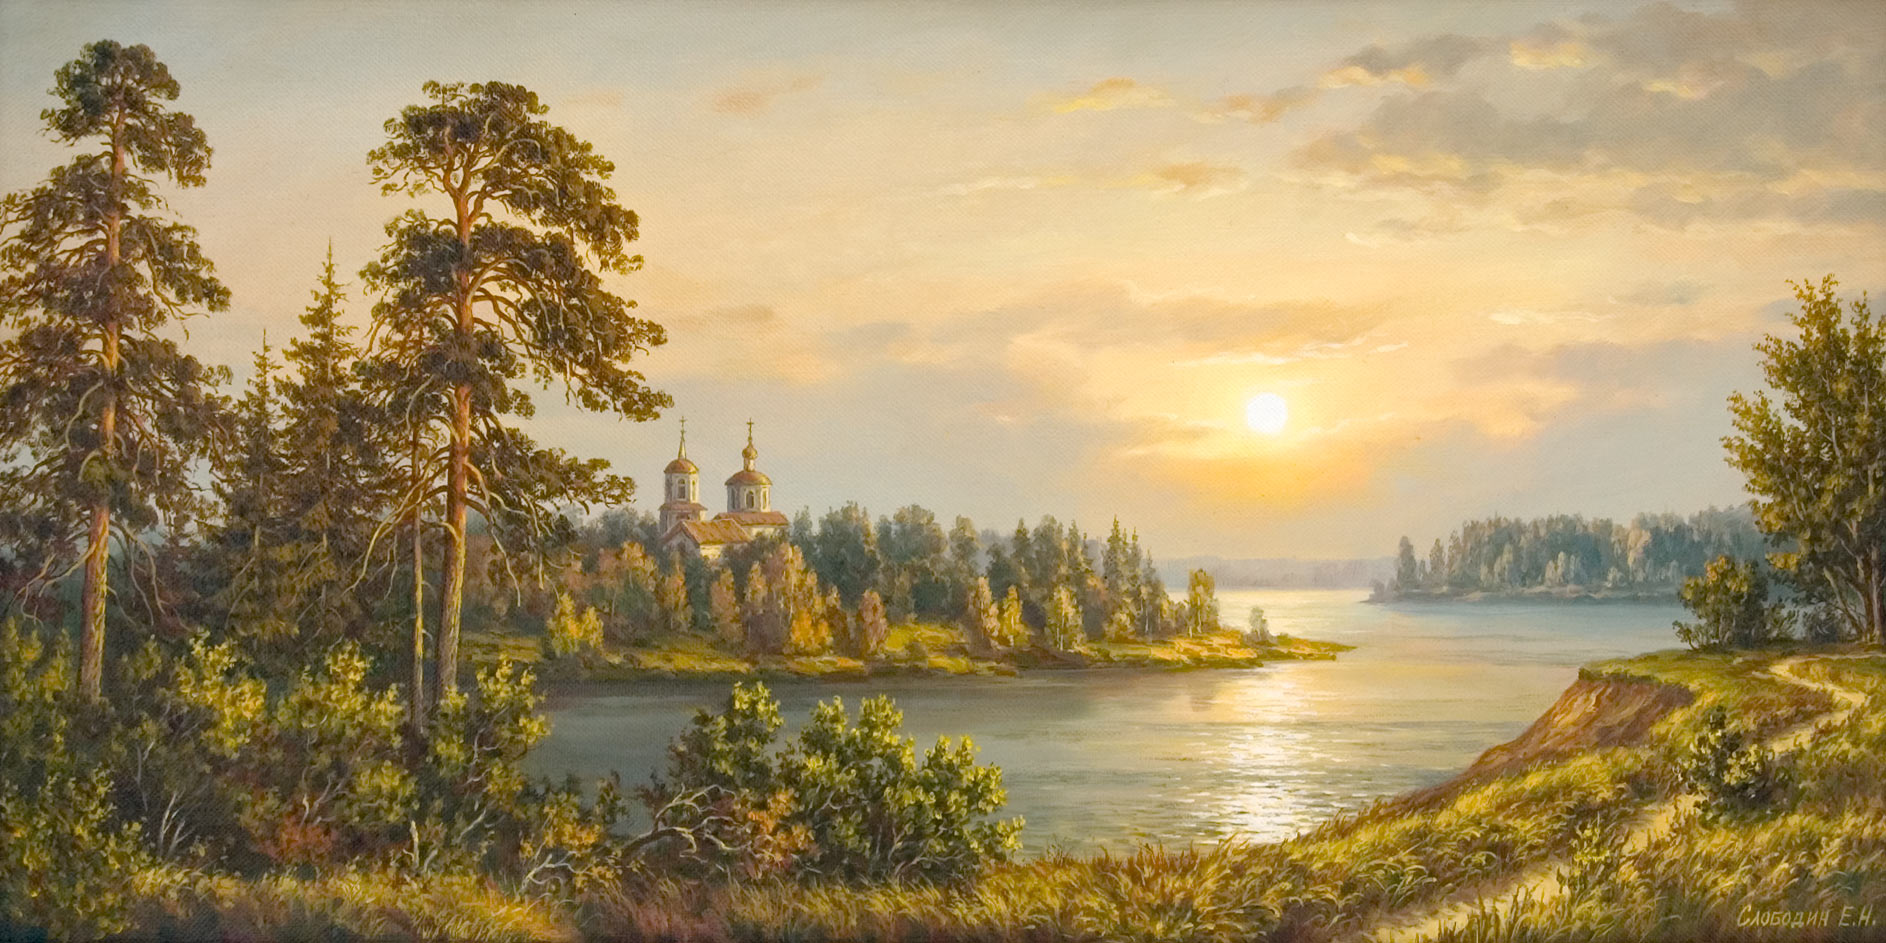 Церковь. Закат на реке — картина маслом на холсте